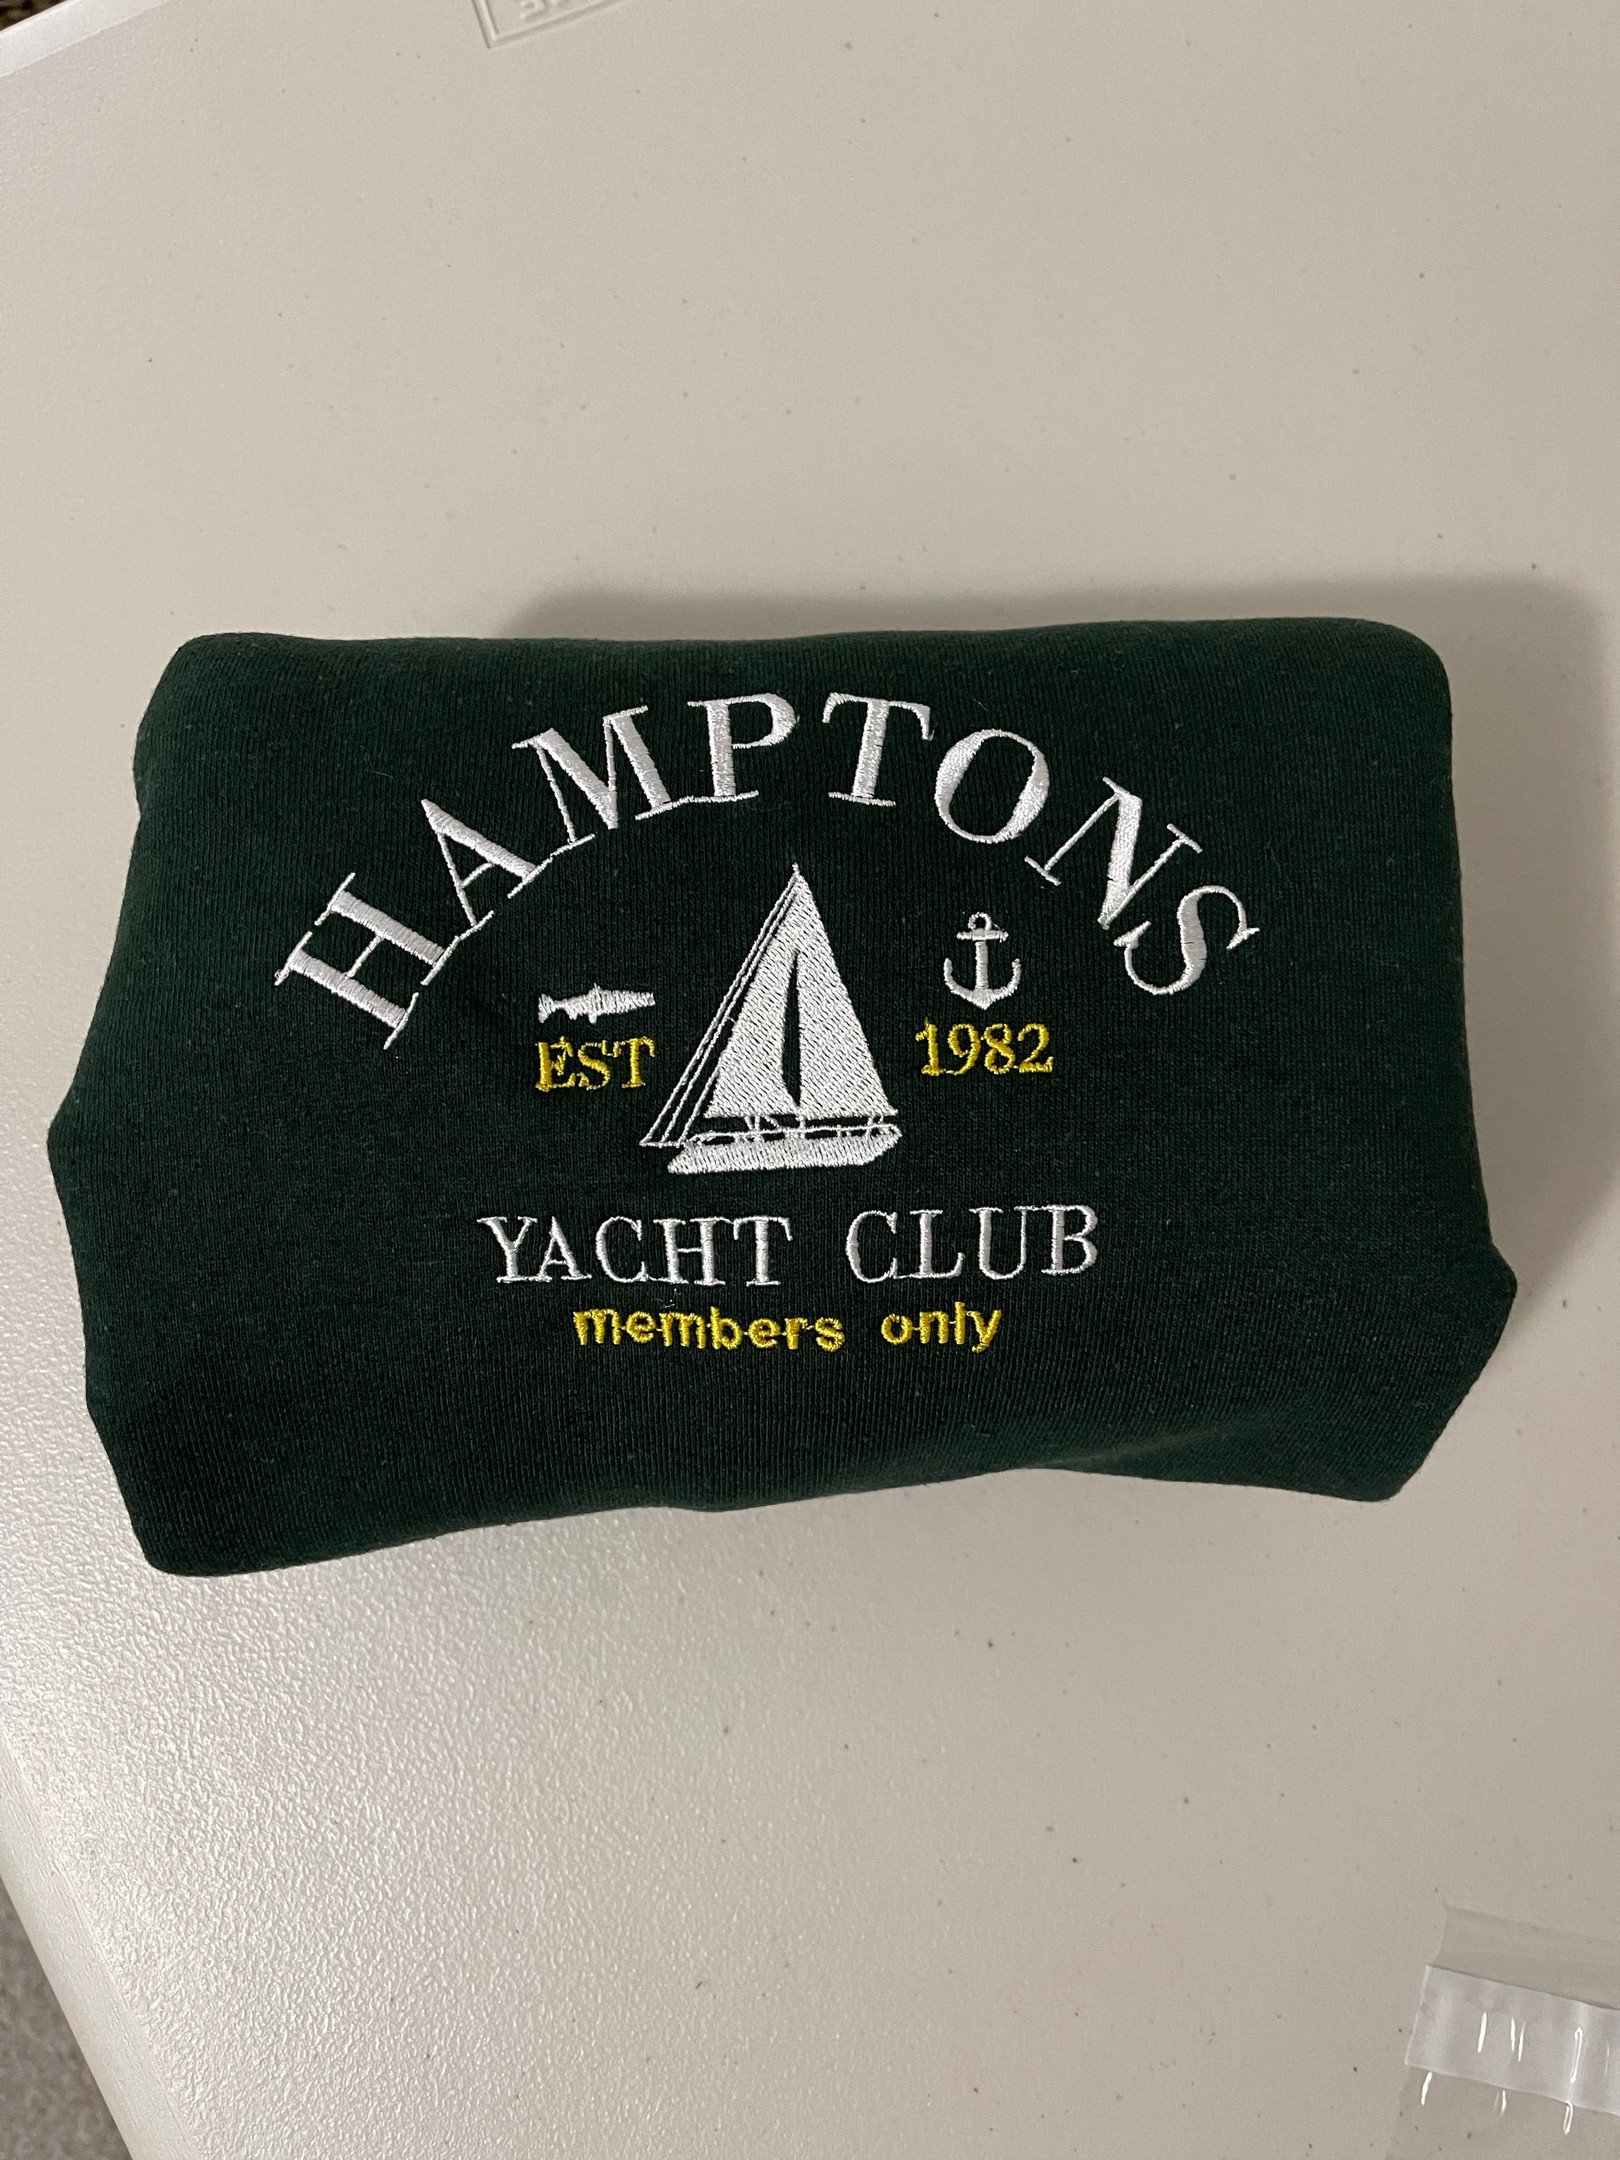 hamptons yacht club sweatshirt